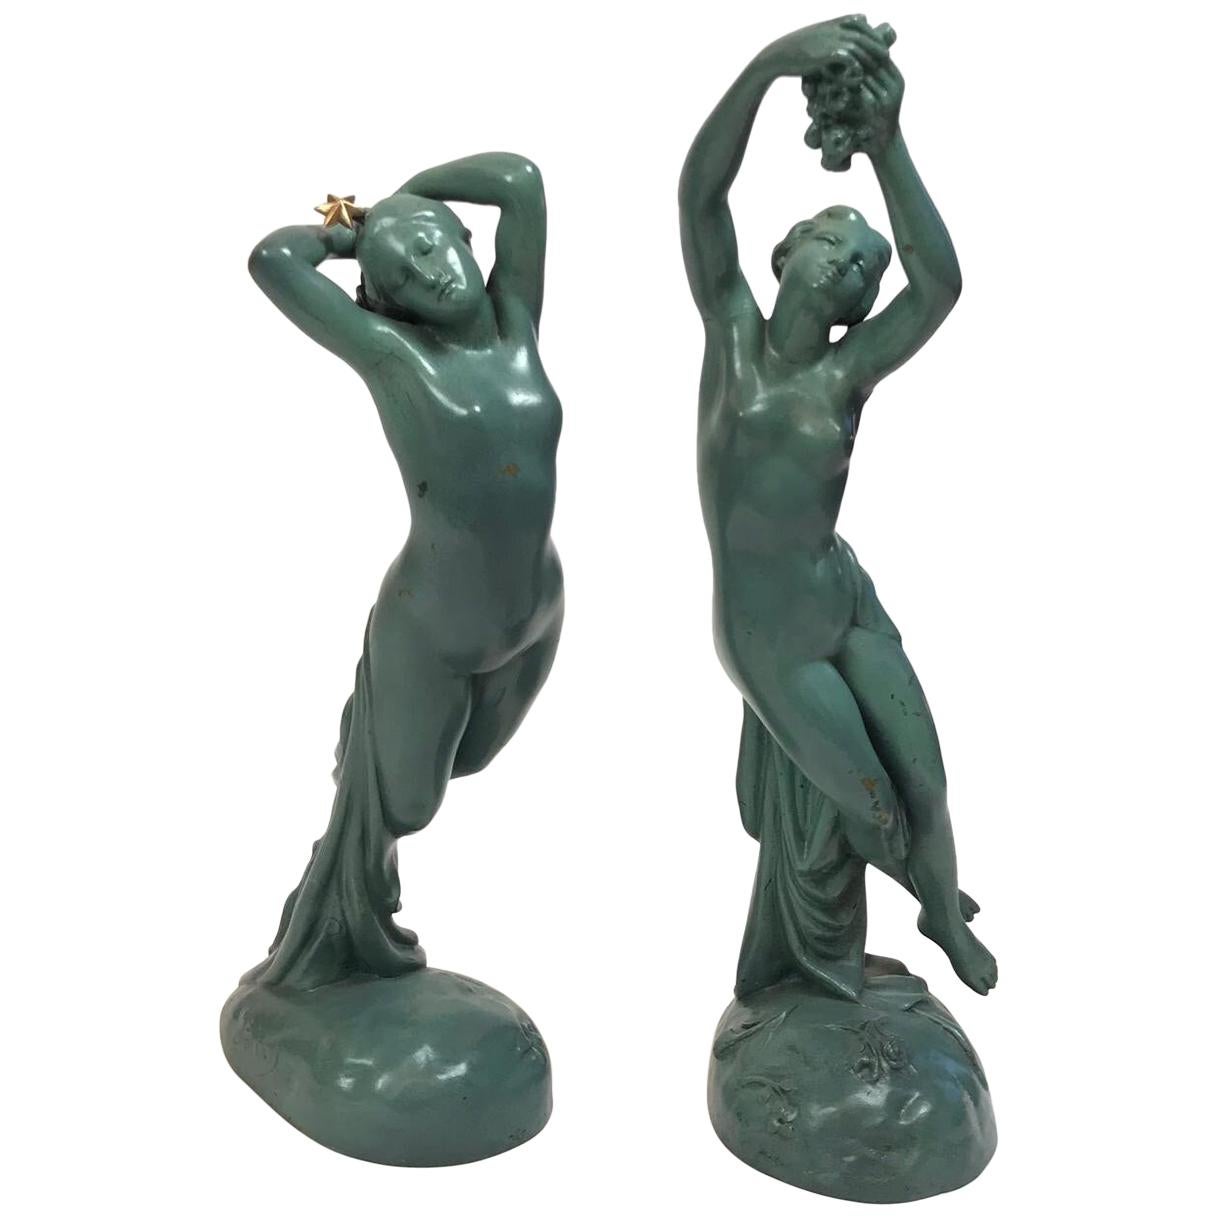 Joseph Michel-Ange Pollet 2 Bronze Figures, "Une Heure De La Nuit"